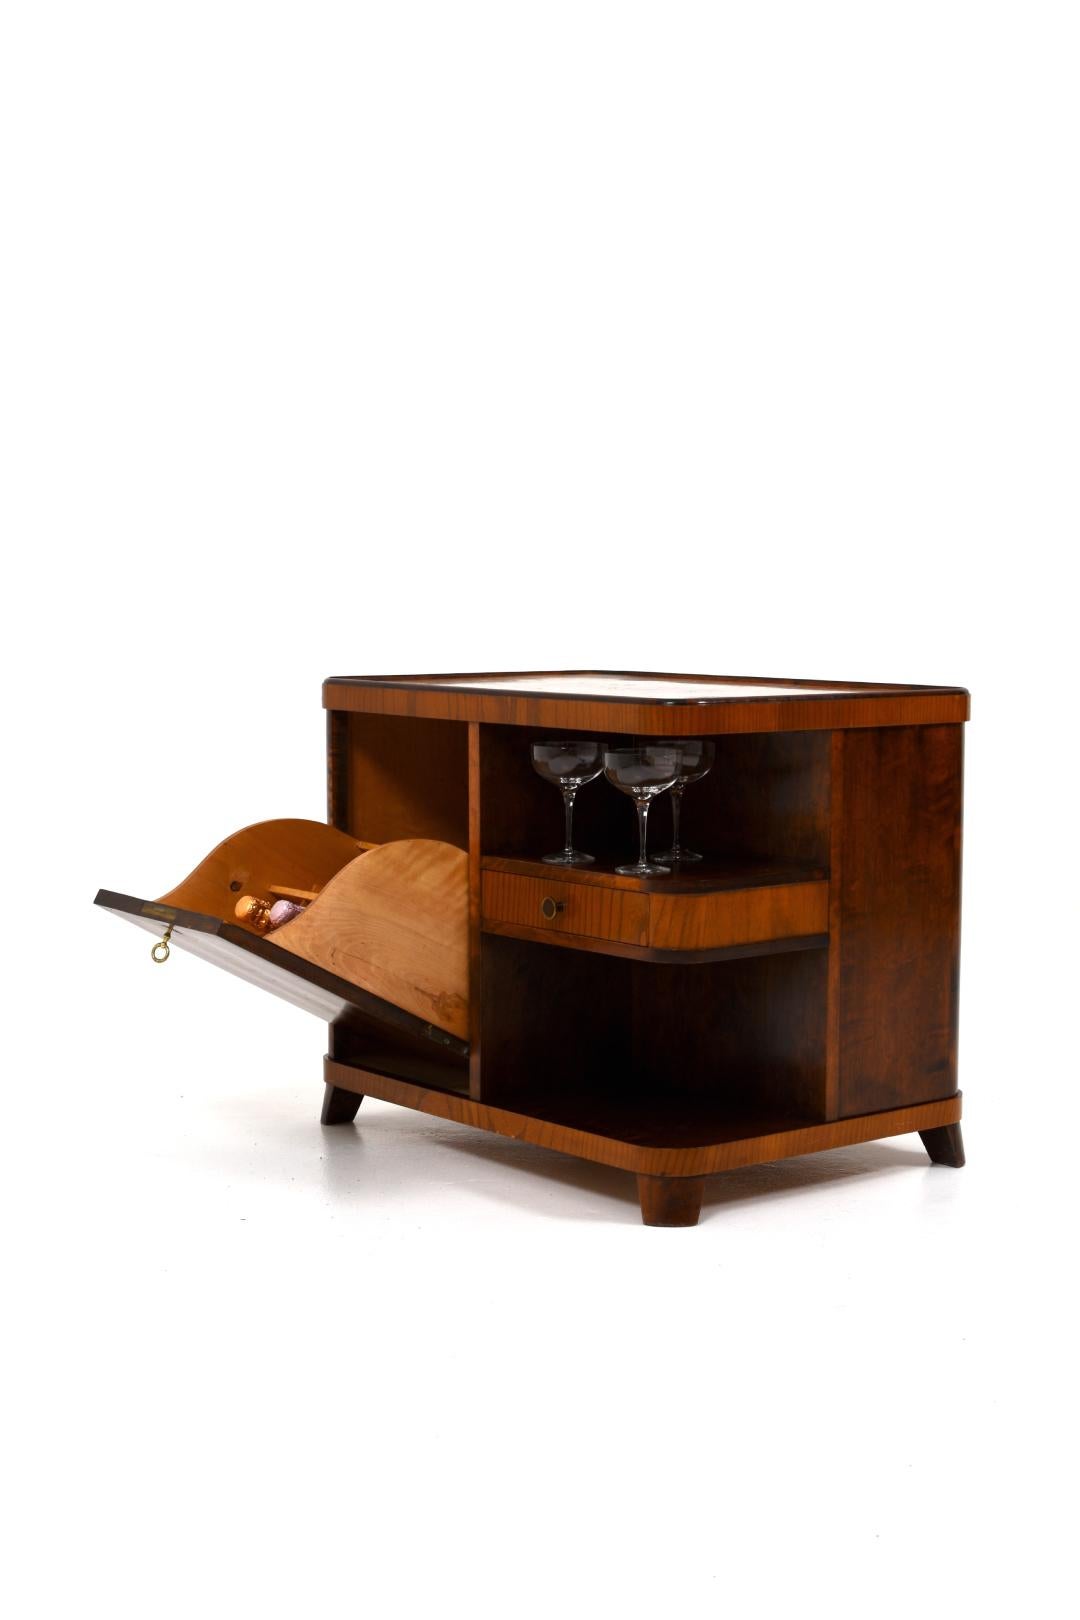 Swedish Art Deco Intarsia Bar Cabinet  For Sale 5